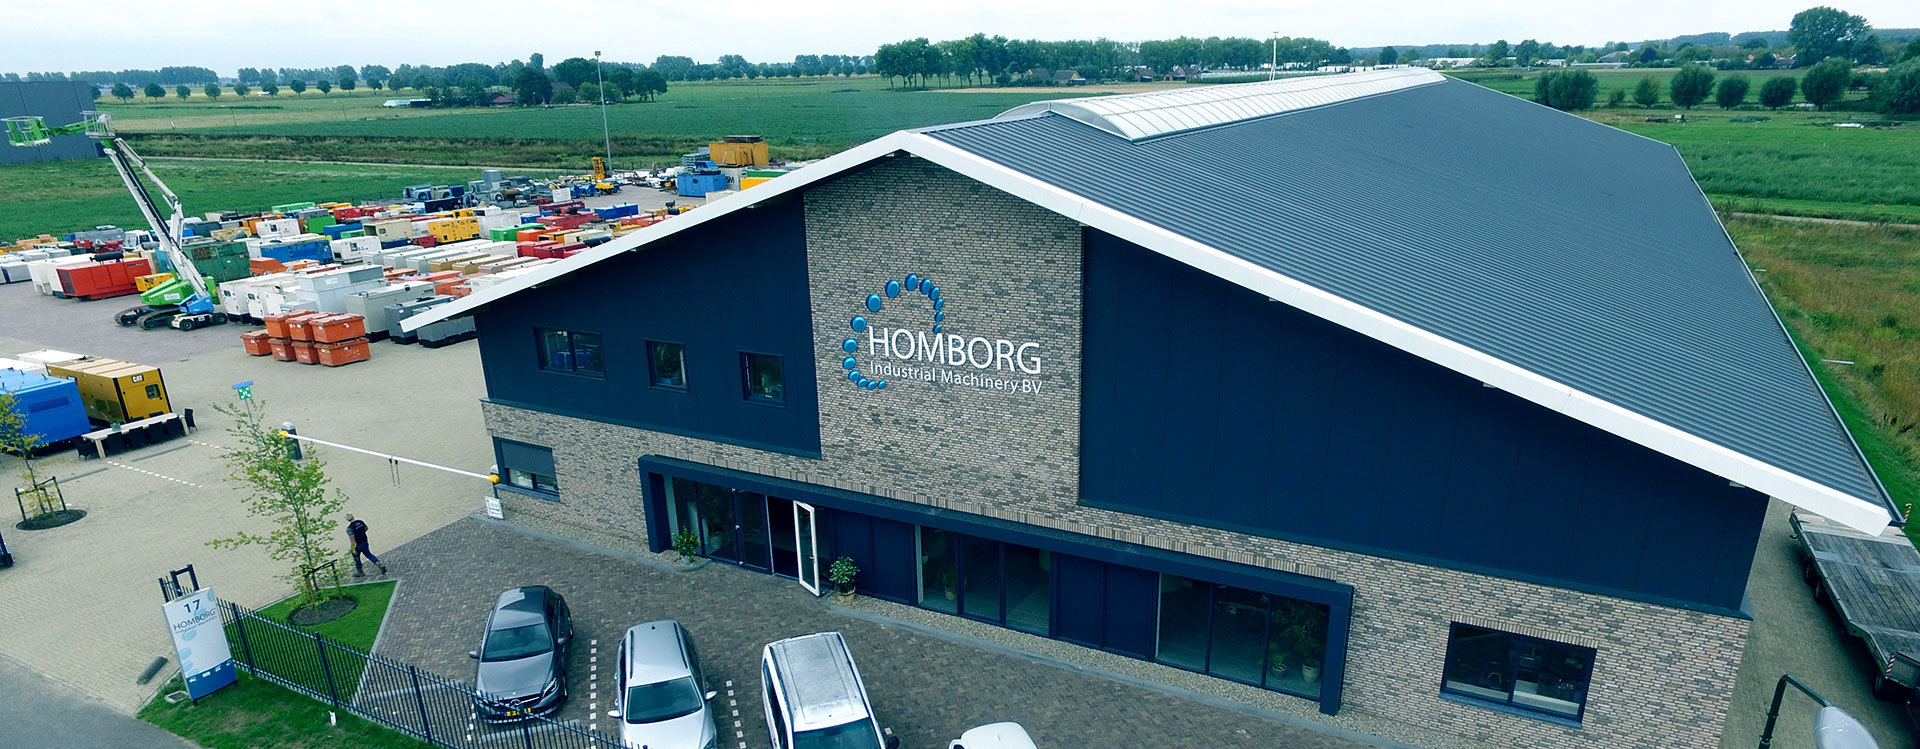 Homborg Industrial Machinery B.V.  - Engins de chantier undefined: photos 1